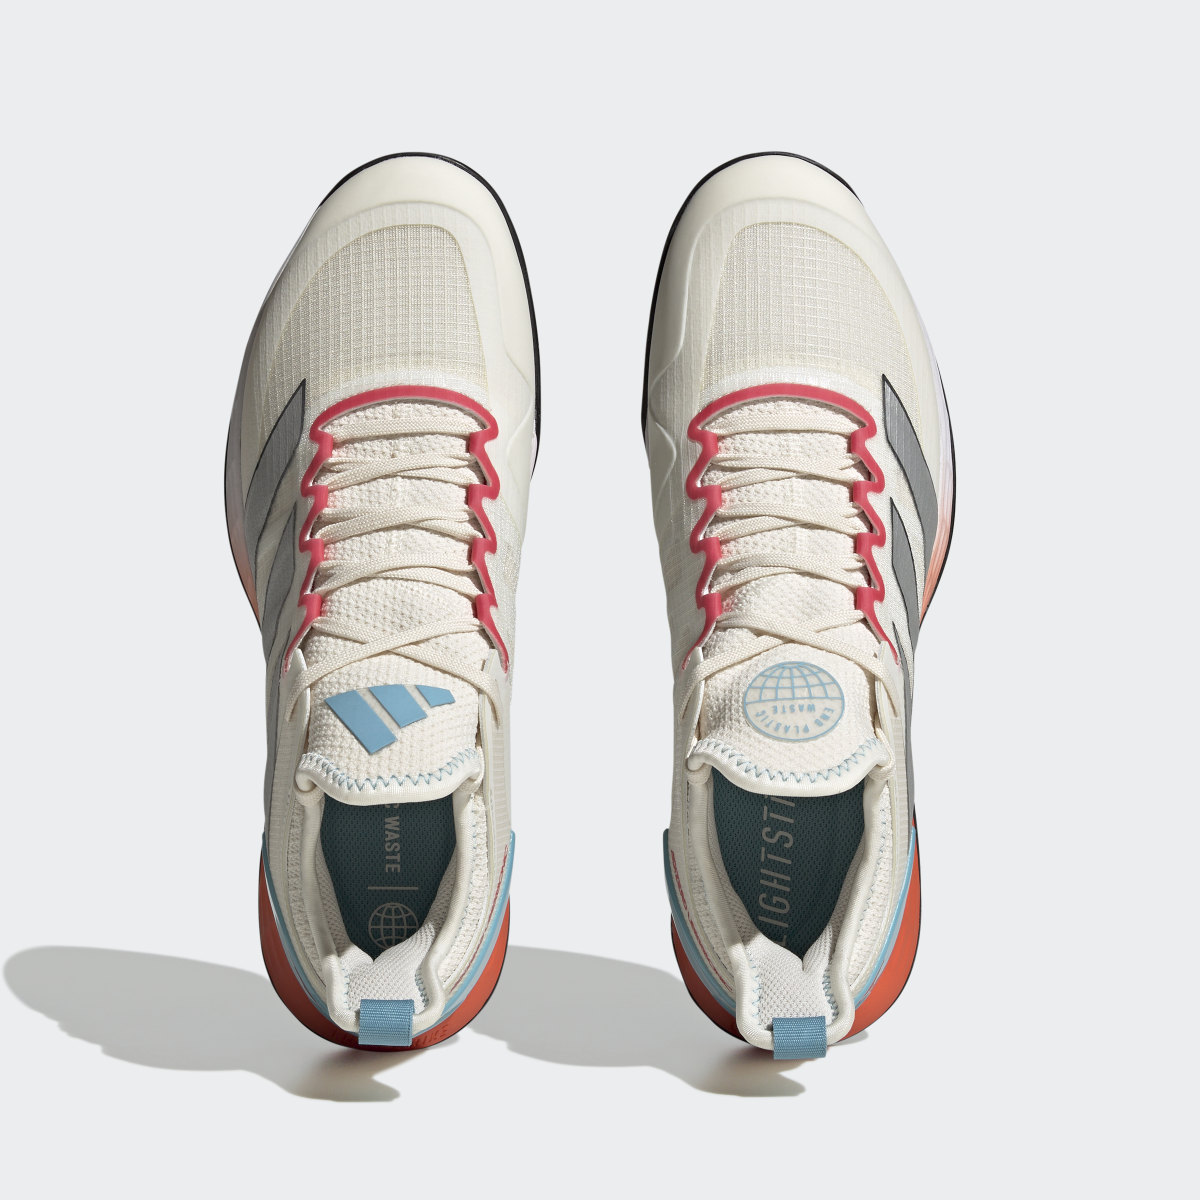 Adidas adizero Ubersonic 4 Clay Court Tennis Shoes. 6